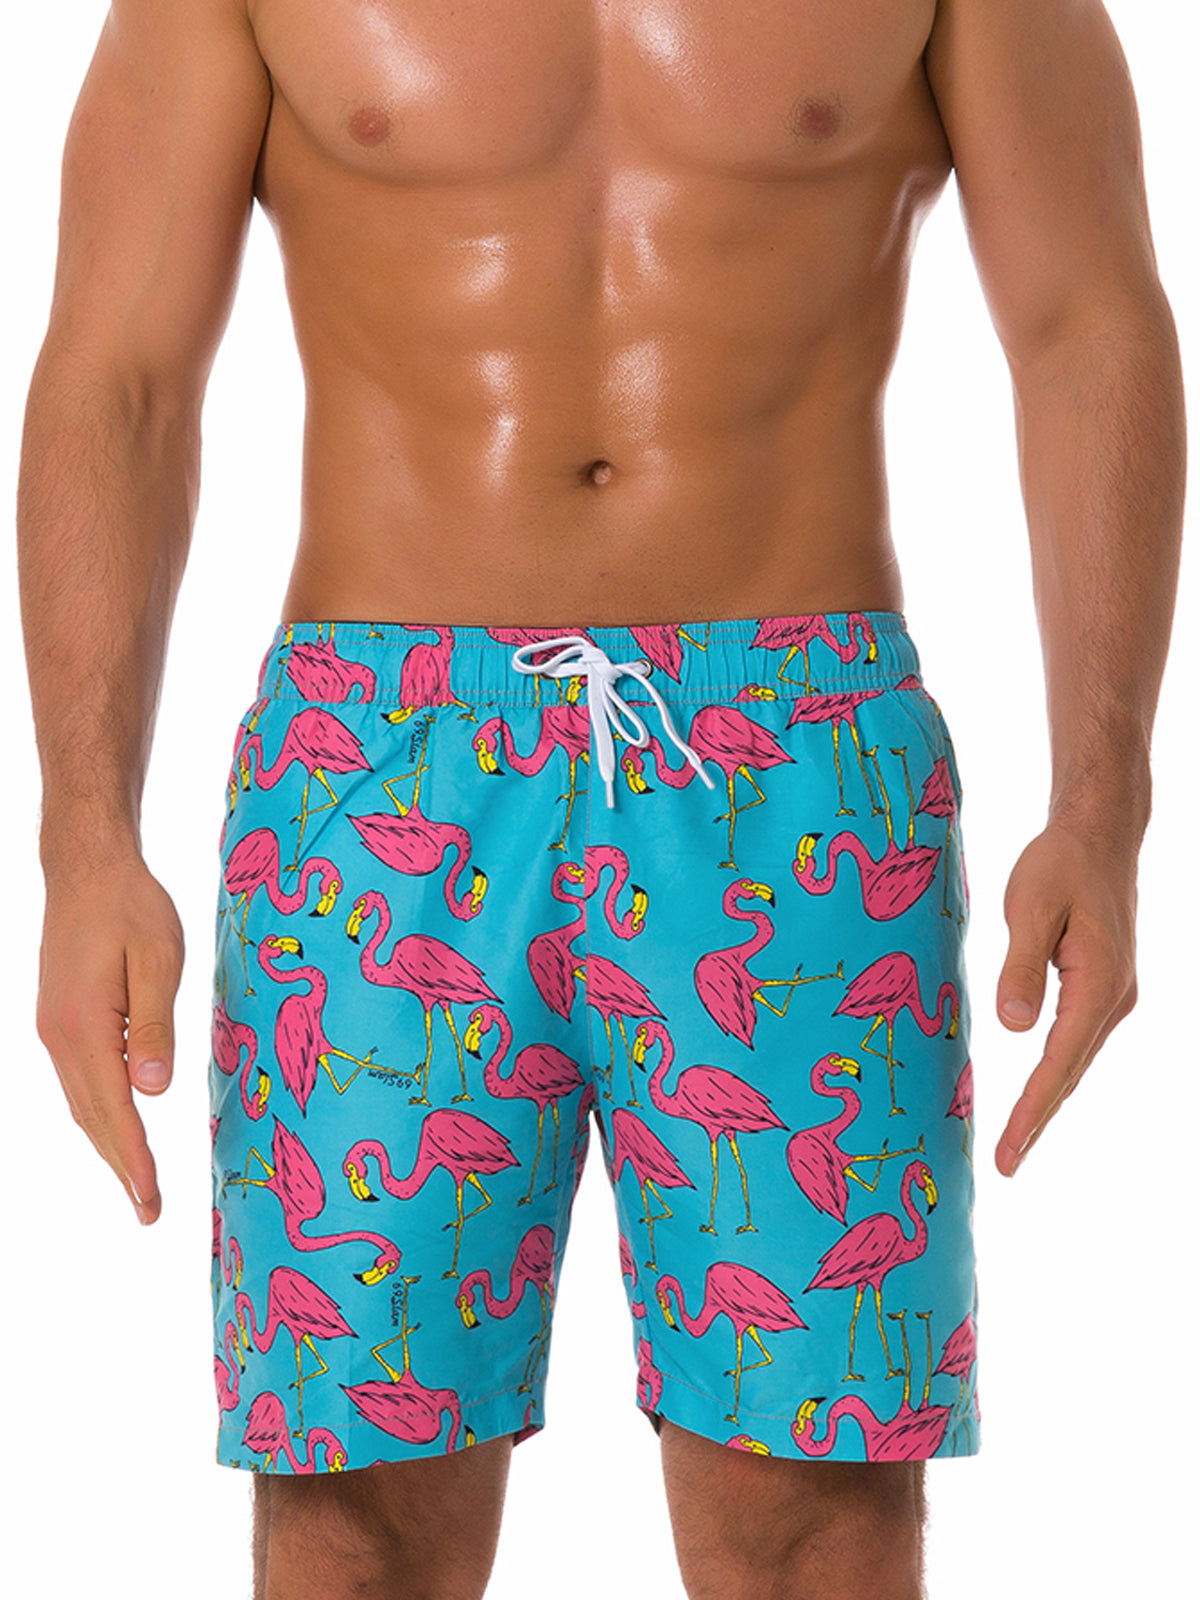 Men's Summer Tropical Leaf Print Beach Shorts Navy Blue Swimming Trunks